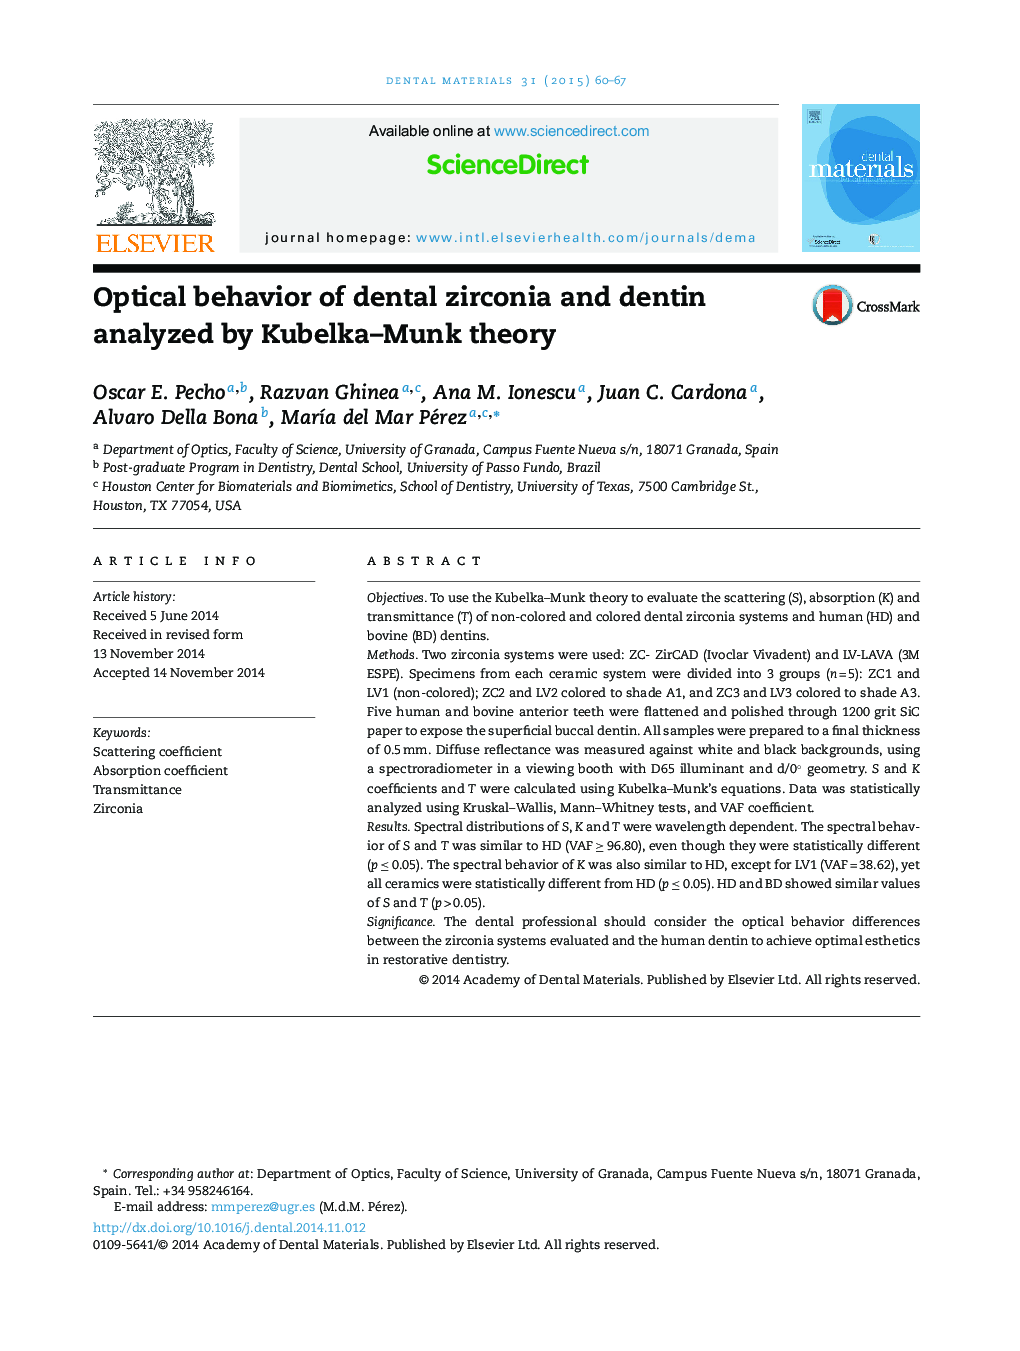 Optical behavior of dental zirconia and dentin analyzed by Kubelka–Munk theory